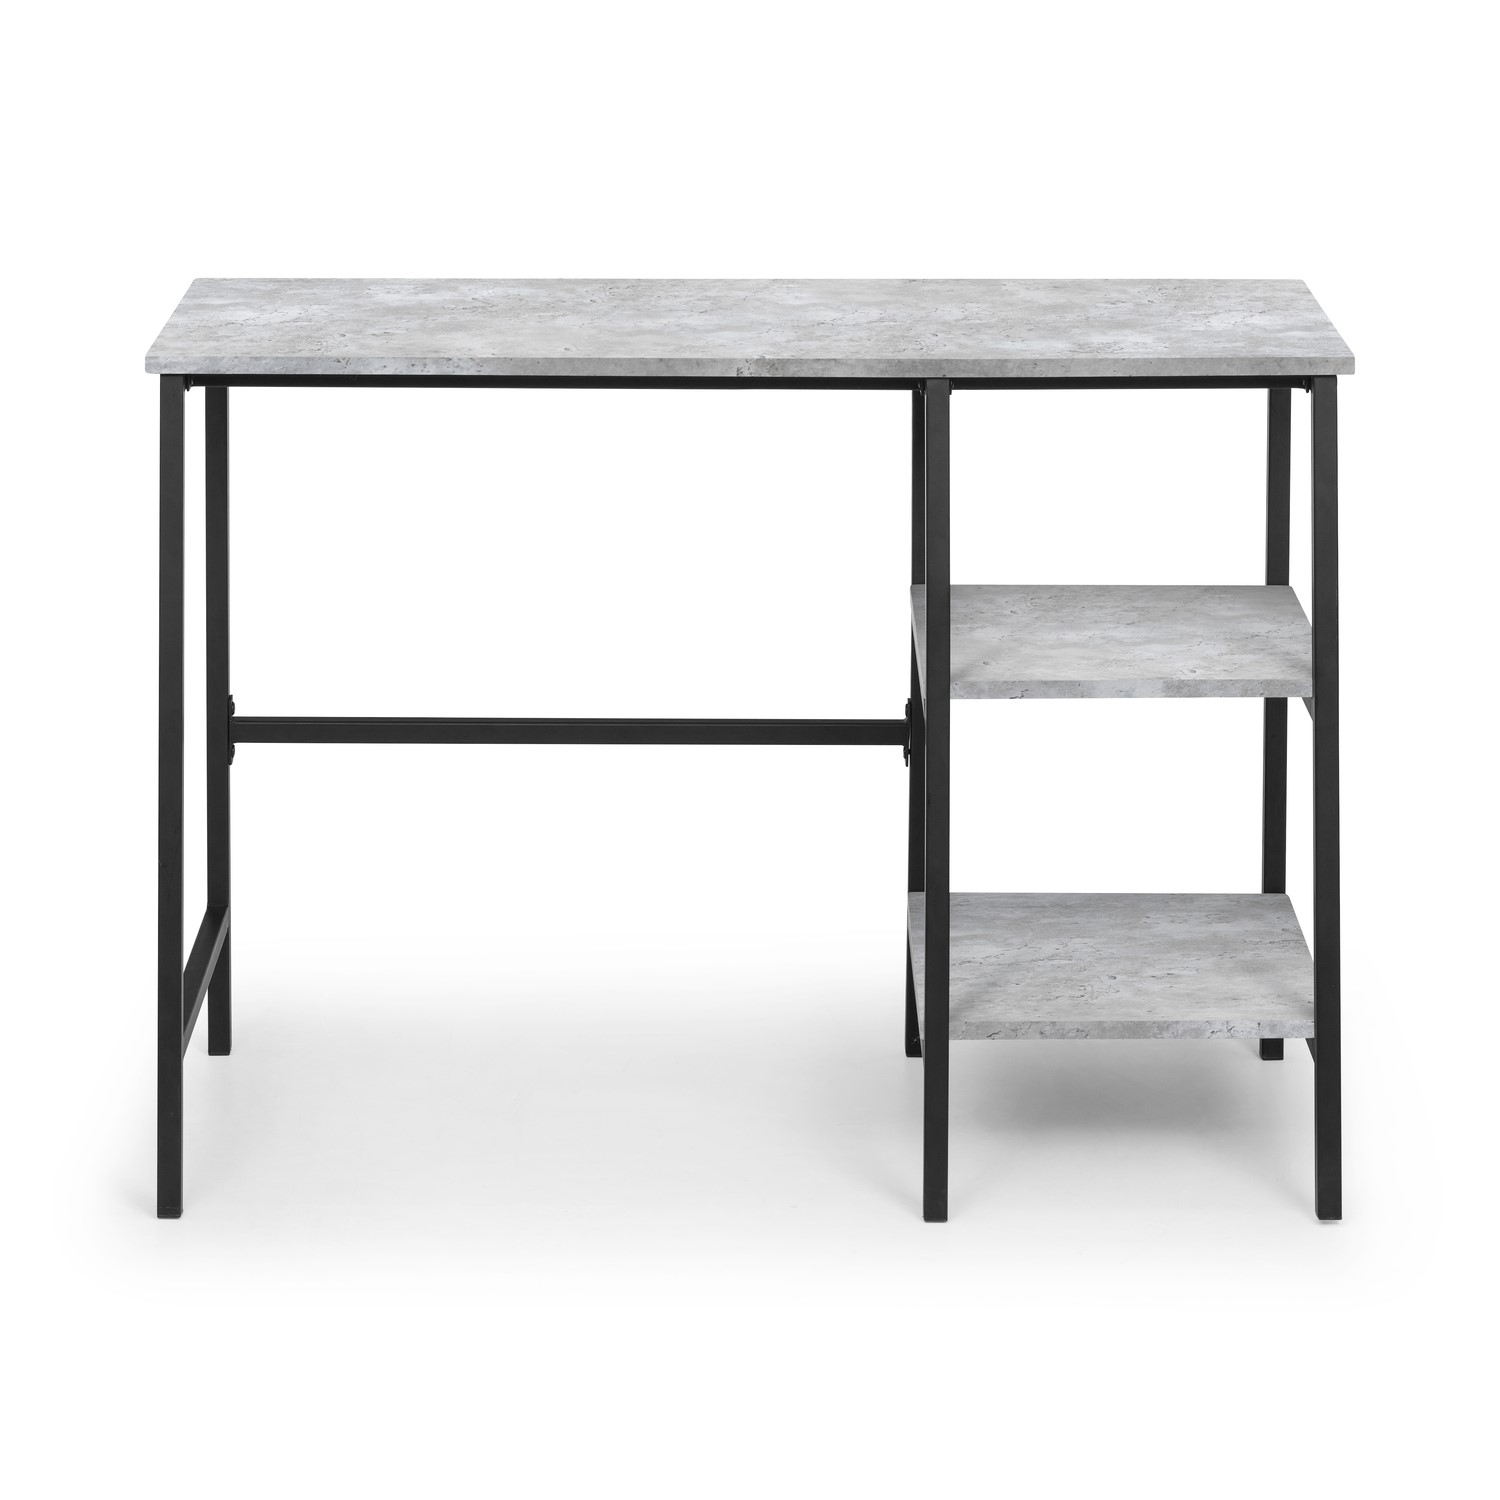 Read more about Grey concrete effect office desk with 2 shelves staten julian bowen